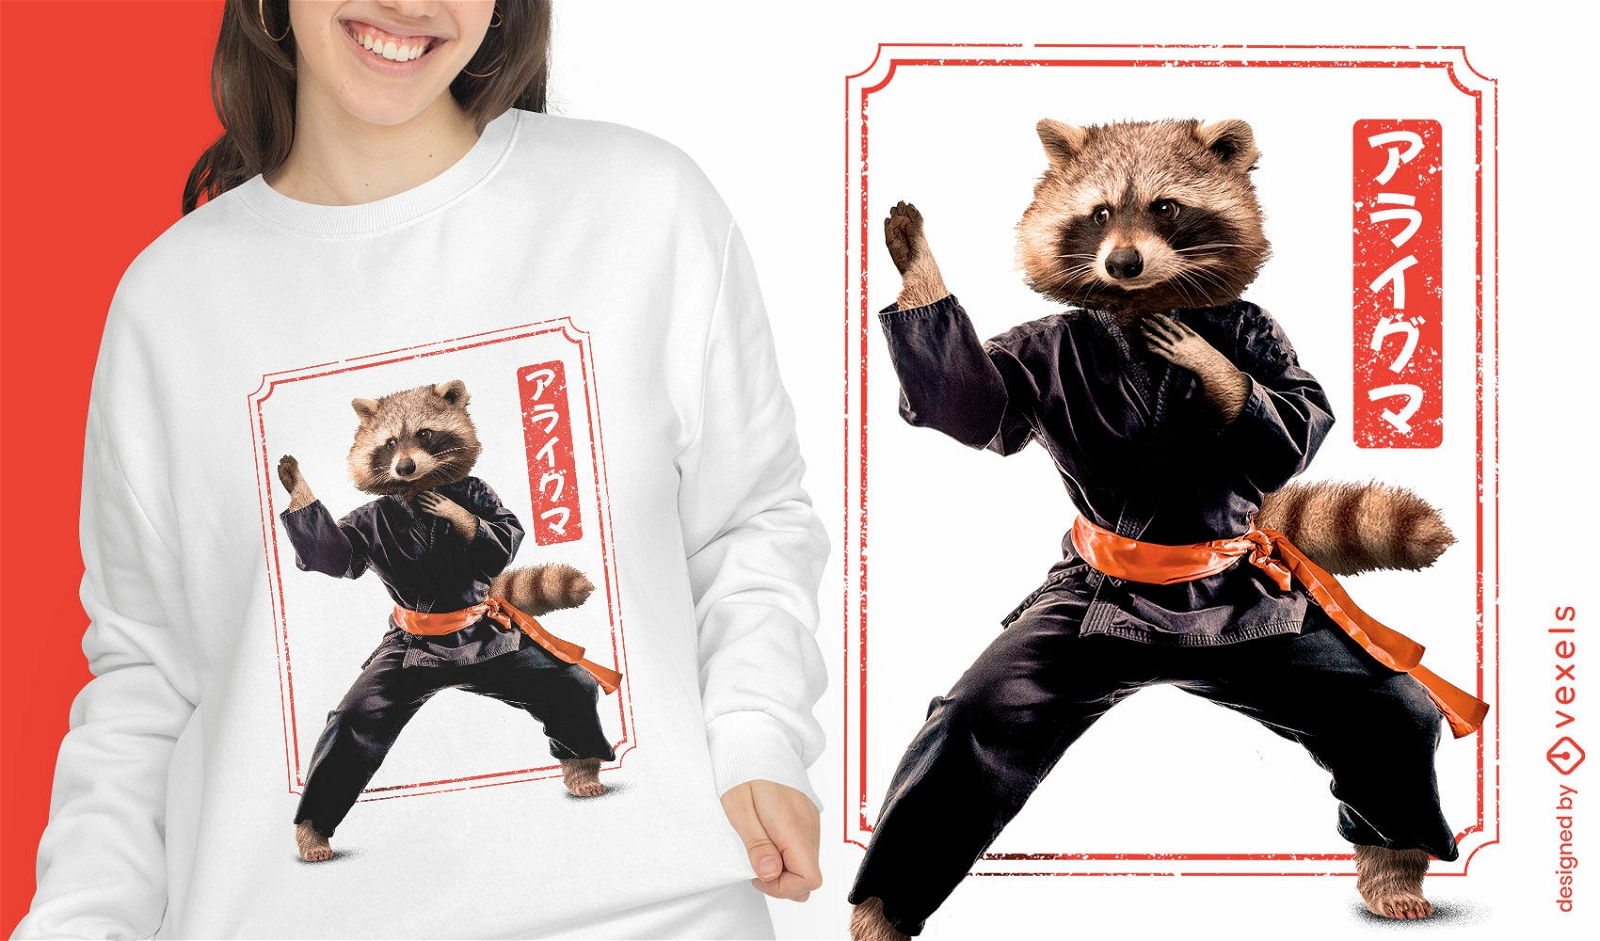 Raccoon animal martial arts t-shirt design